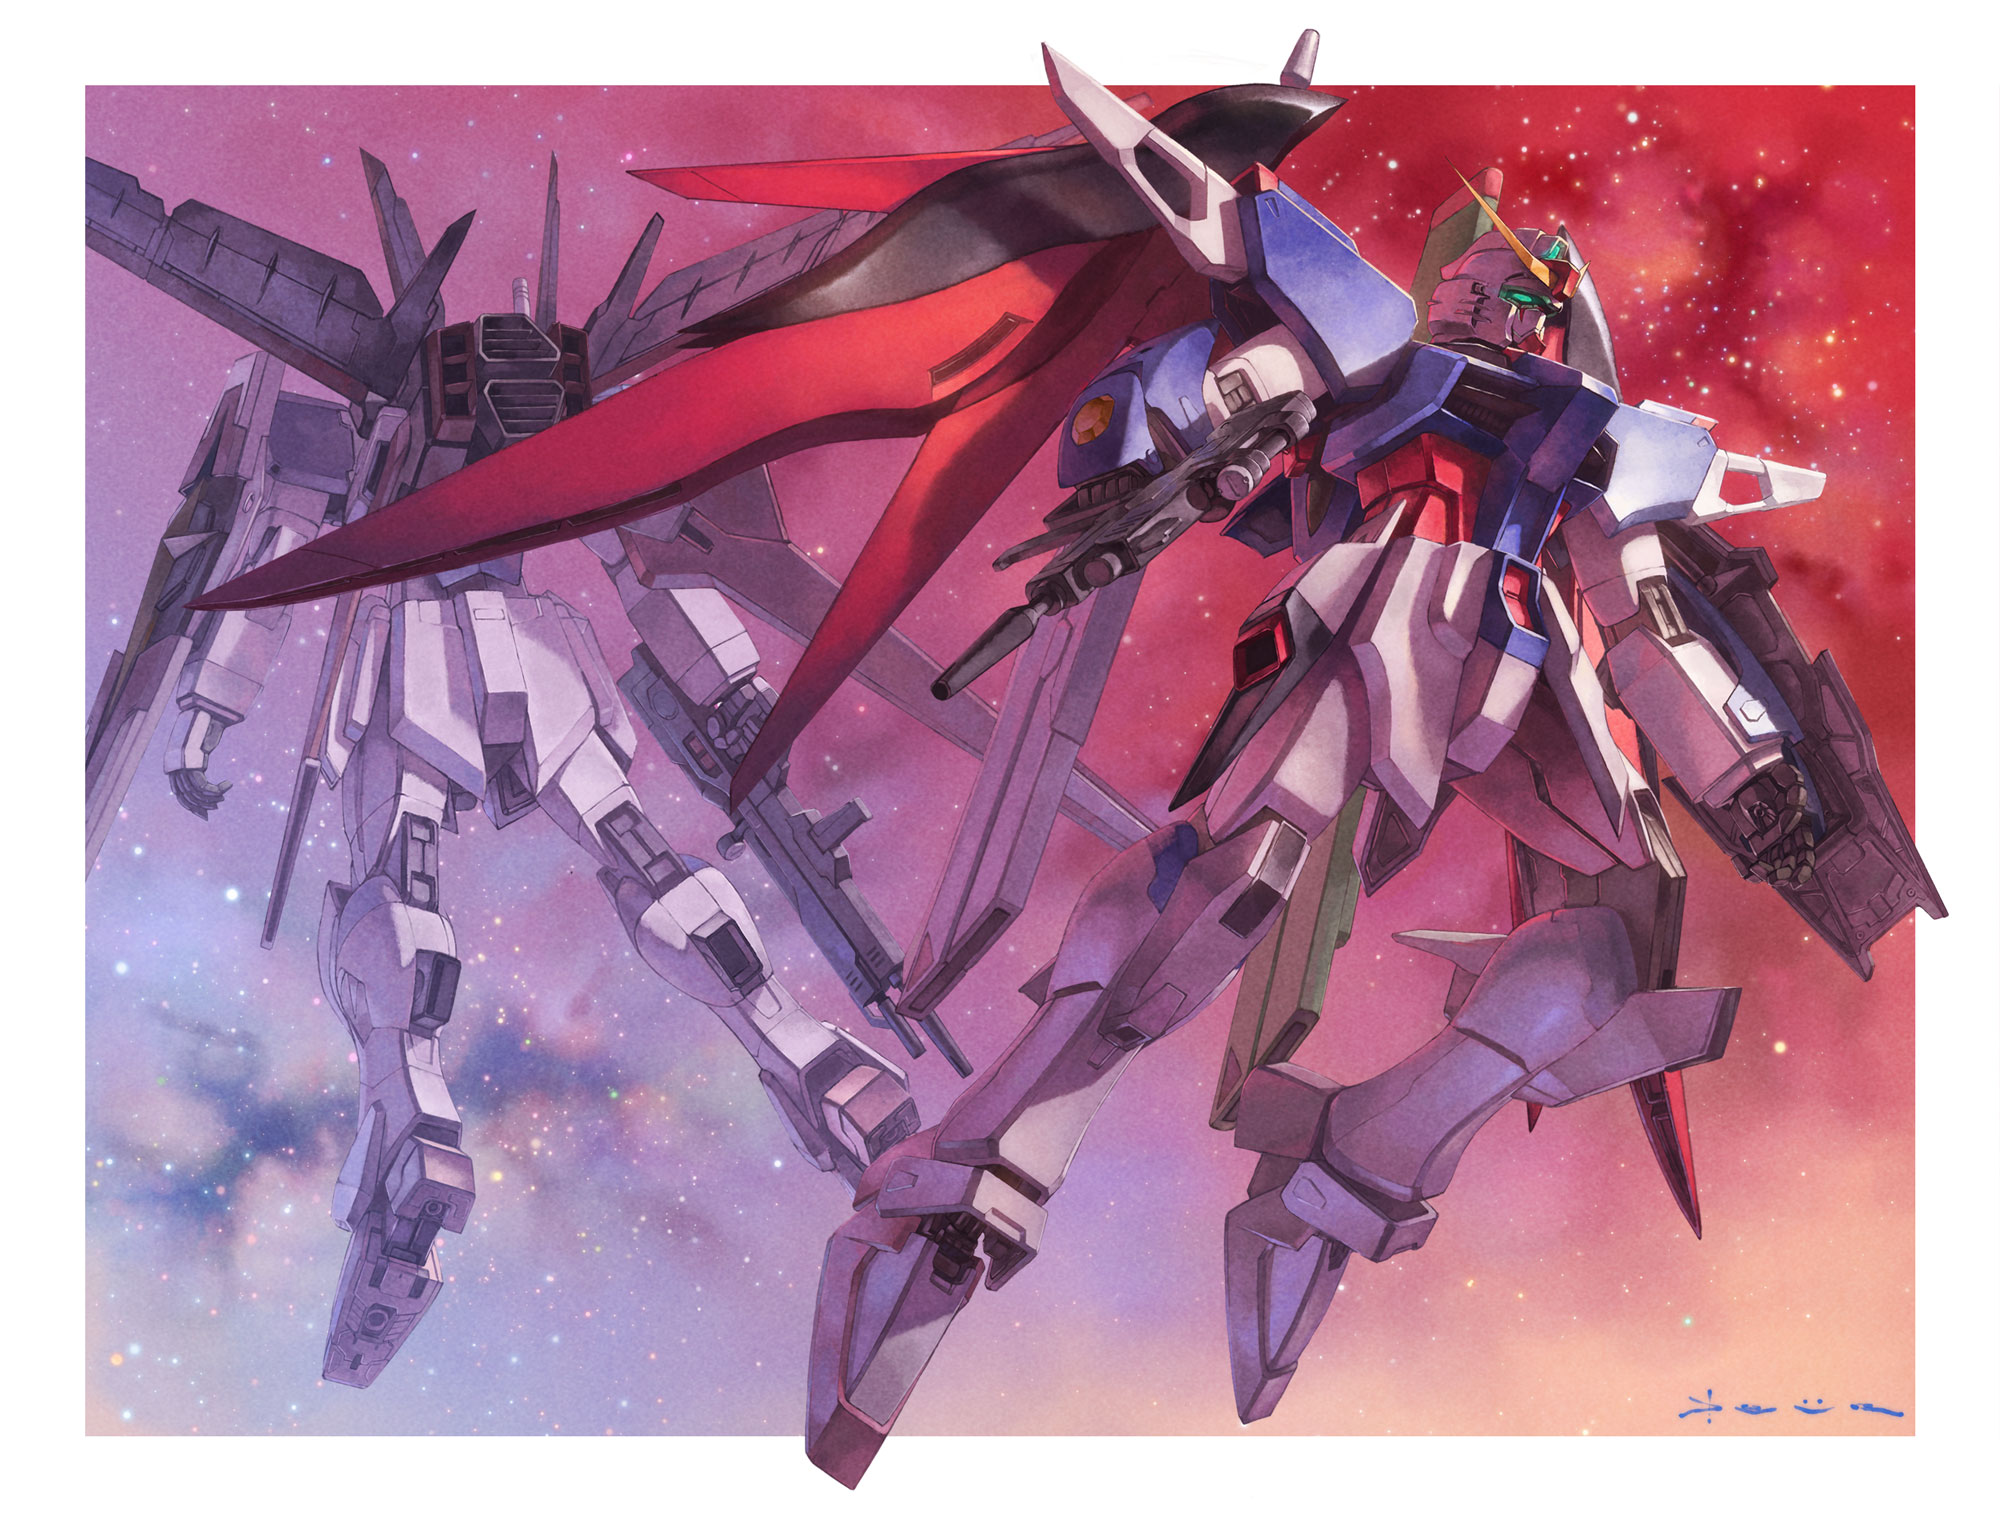 Anime 2000x1521 anime mechs Super Robot Taisen Gundam artwork digital art fan art Destiny Gundam Force Impulse Gundam Mobile Suit Gundam SEED Destiny